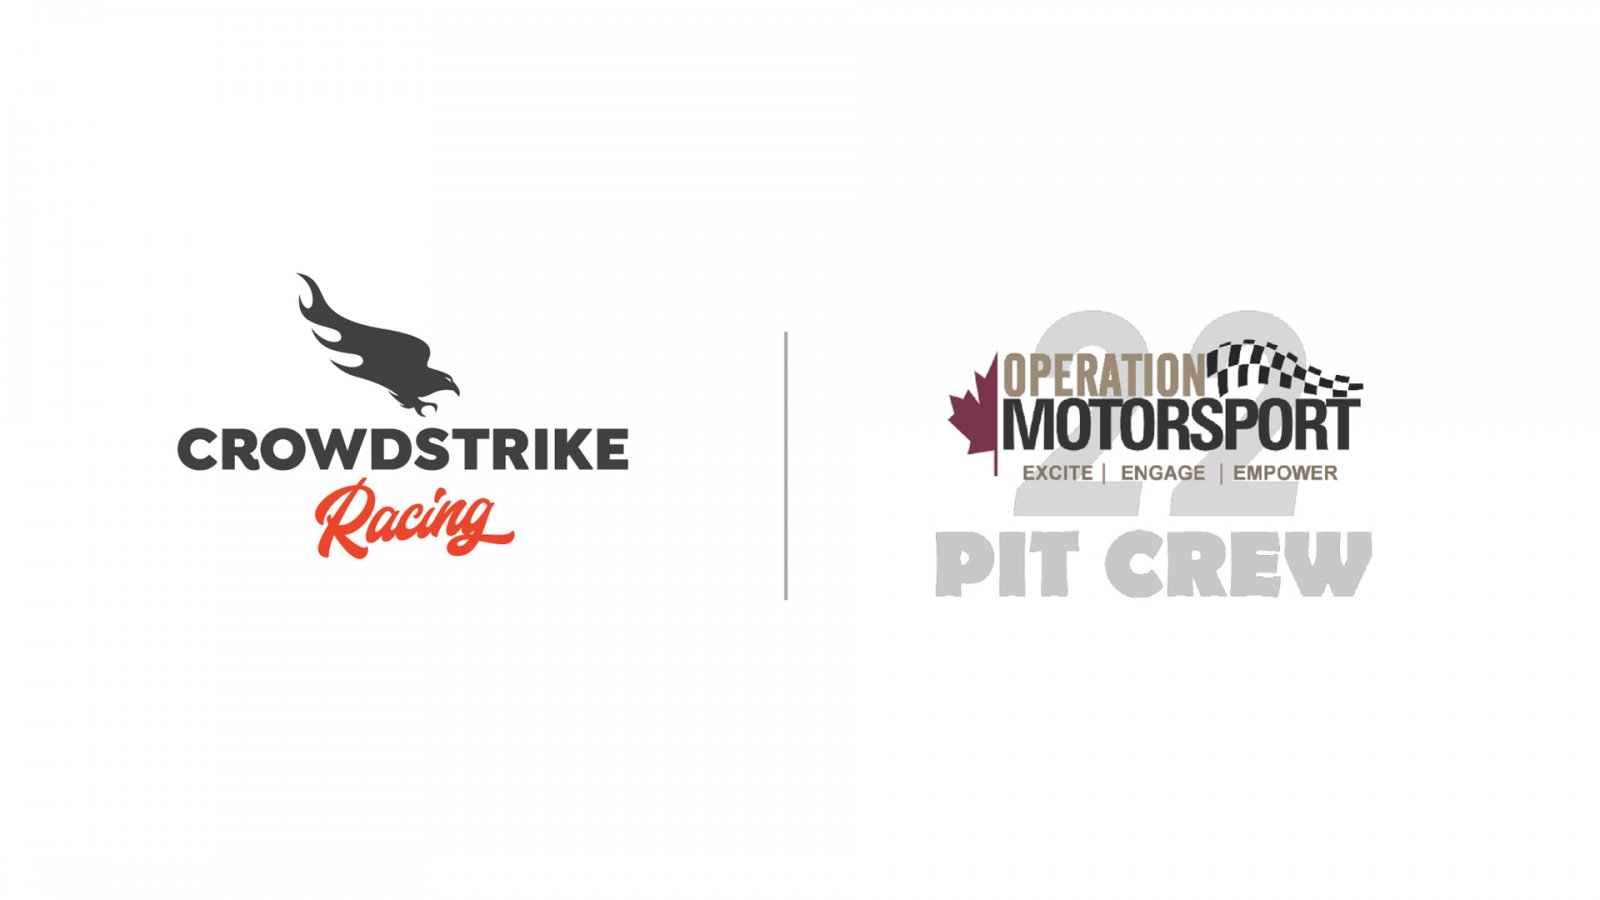 CrowdStrike Reaffirms Support of Operation Motorsport for 2021 Racing Season